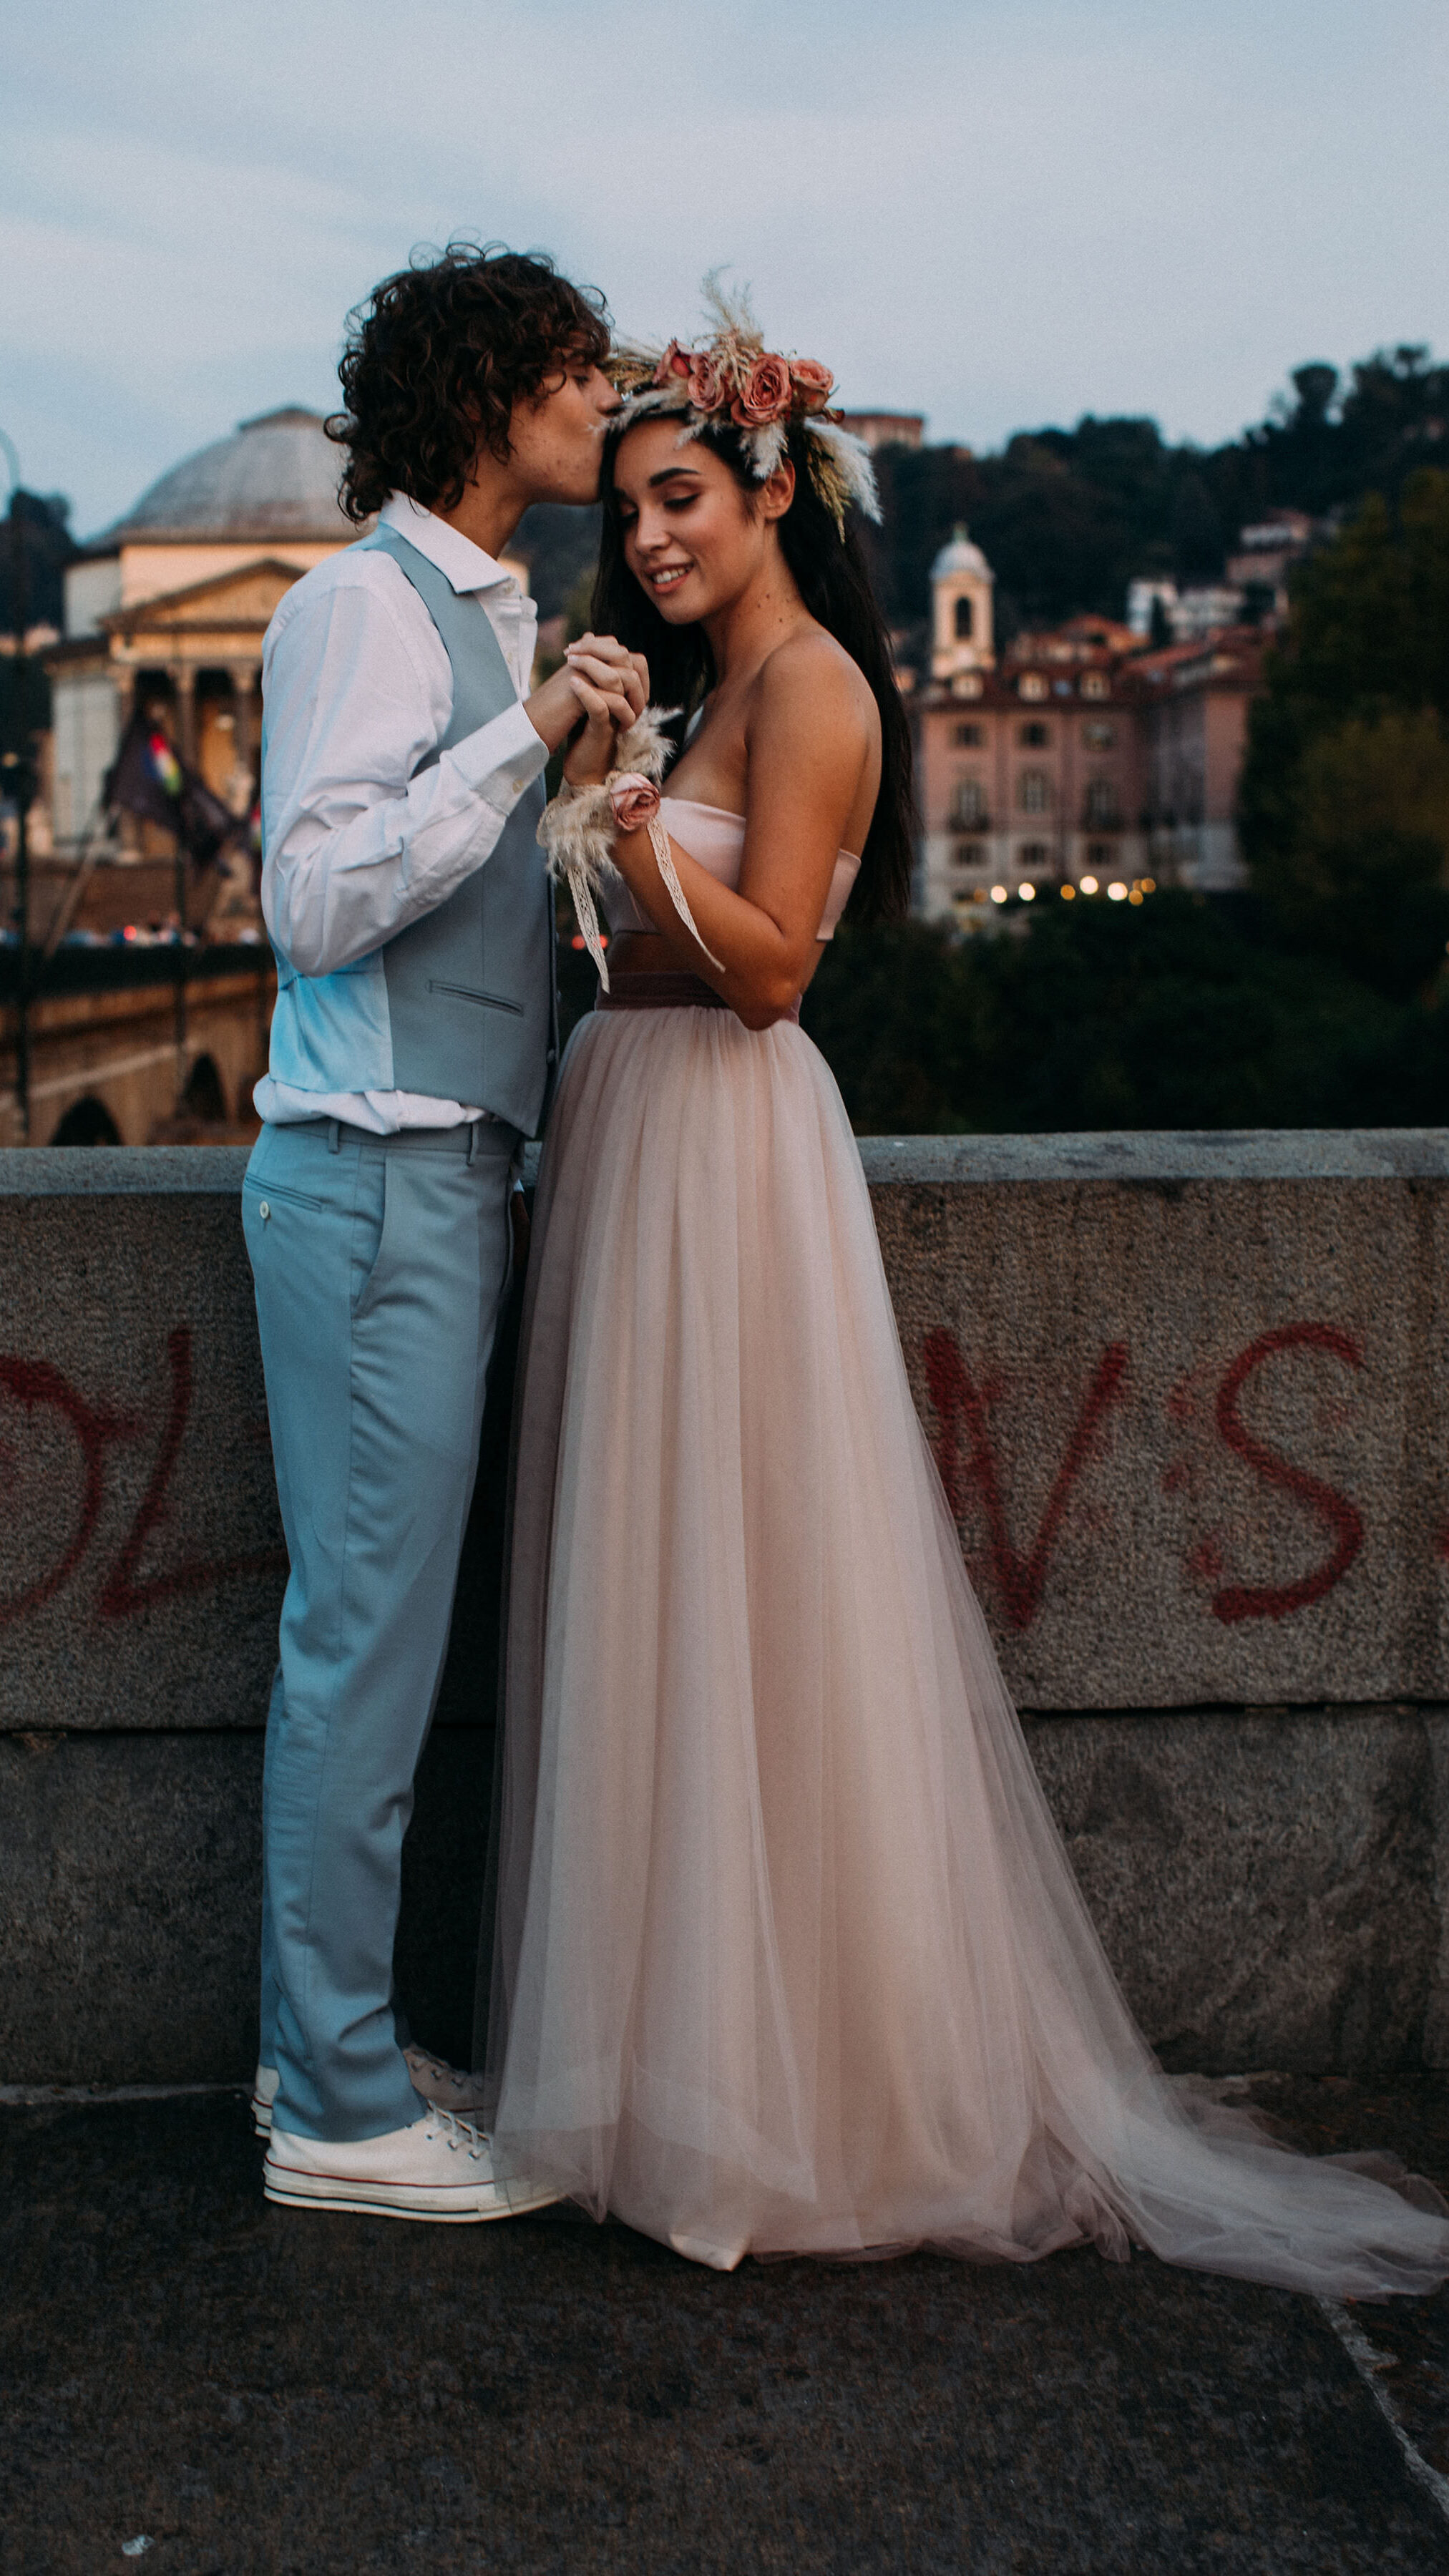 Marriage Proposal Tips  - Photo: Giada Joey Cazzola